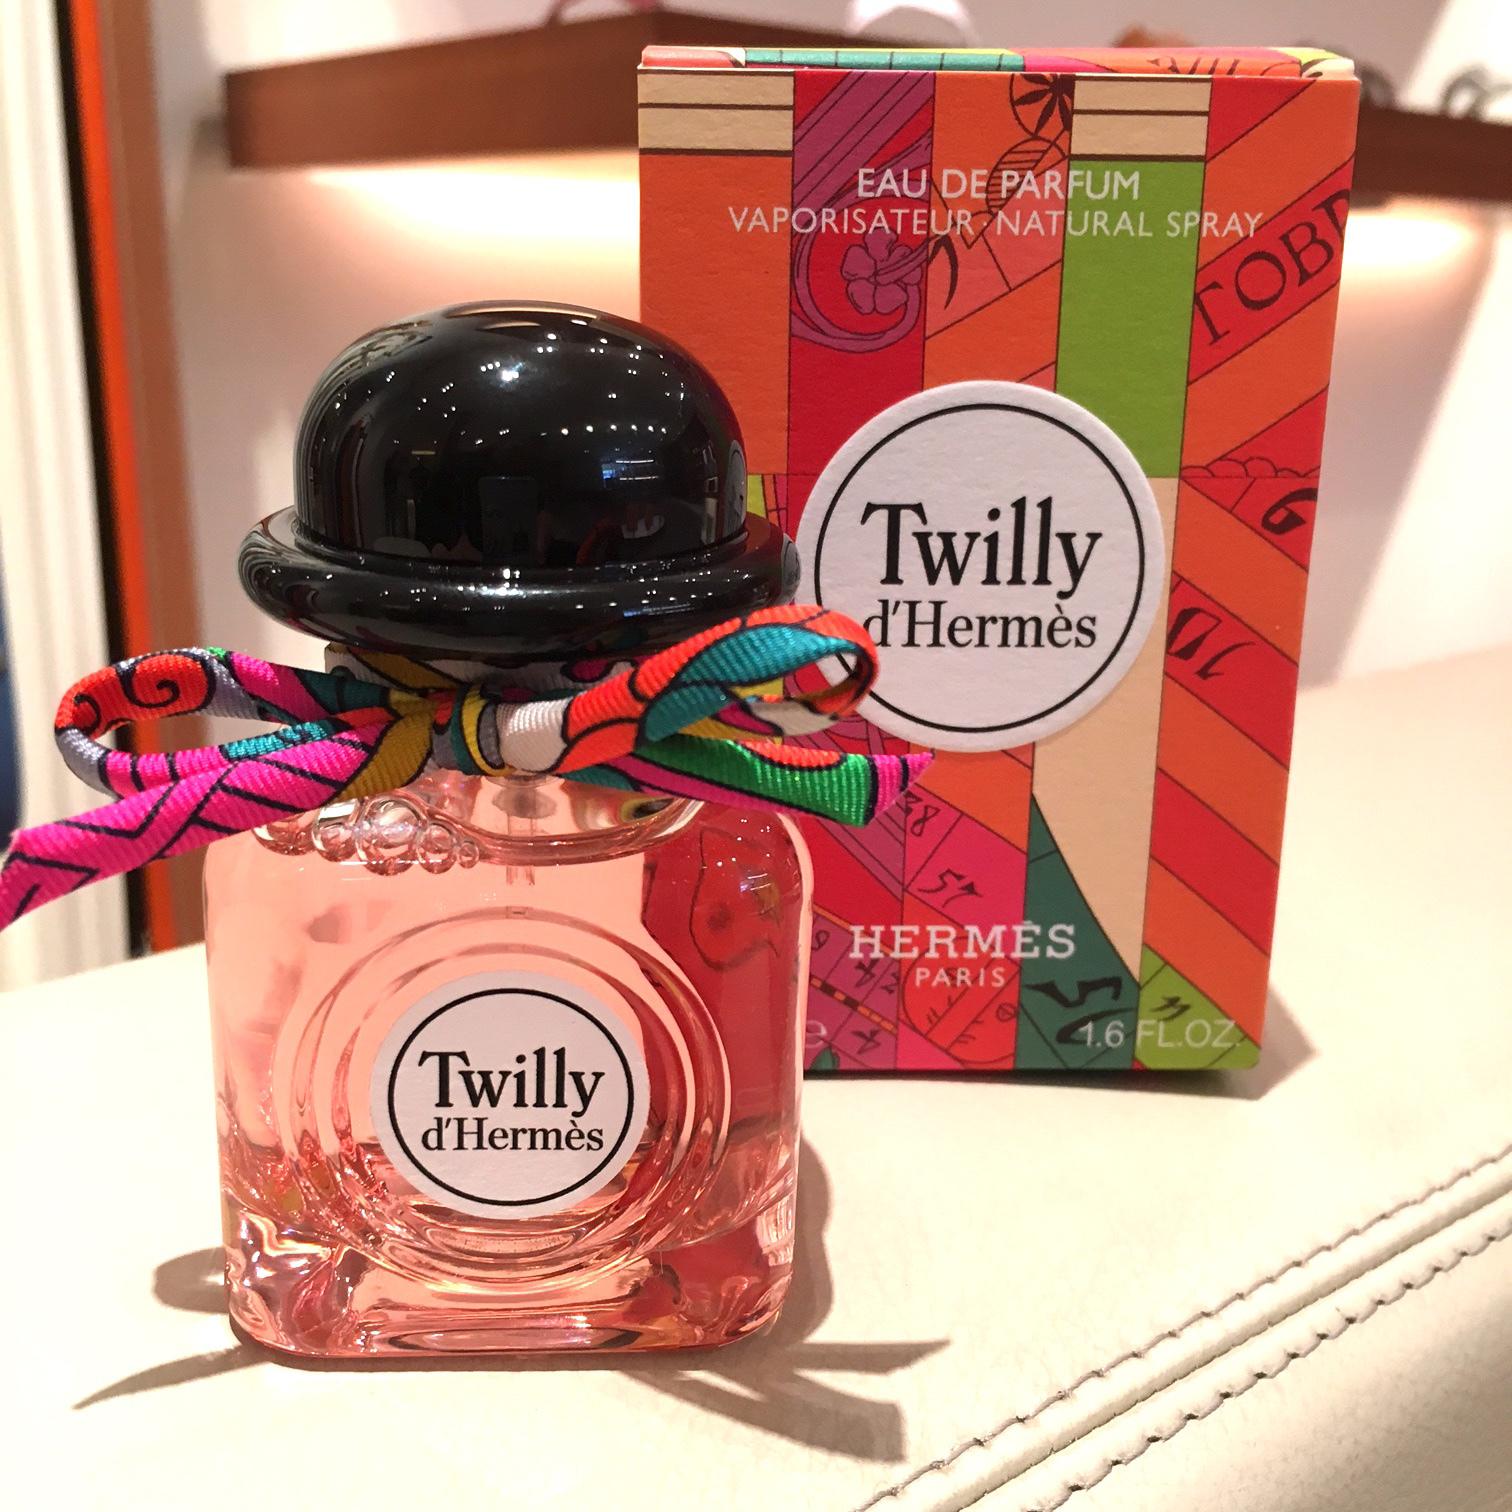 Twilly D'Hermes Eau Poivree 1.6 oz EDP spray womens perfume 50 ml NIB SEALED